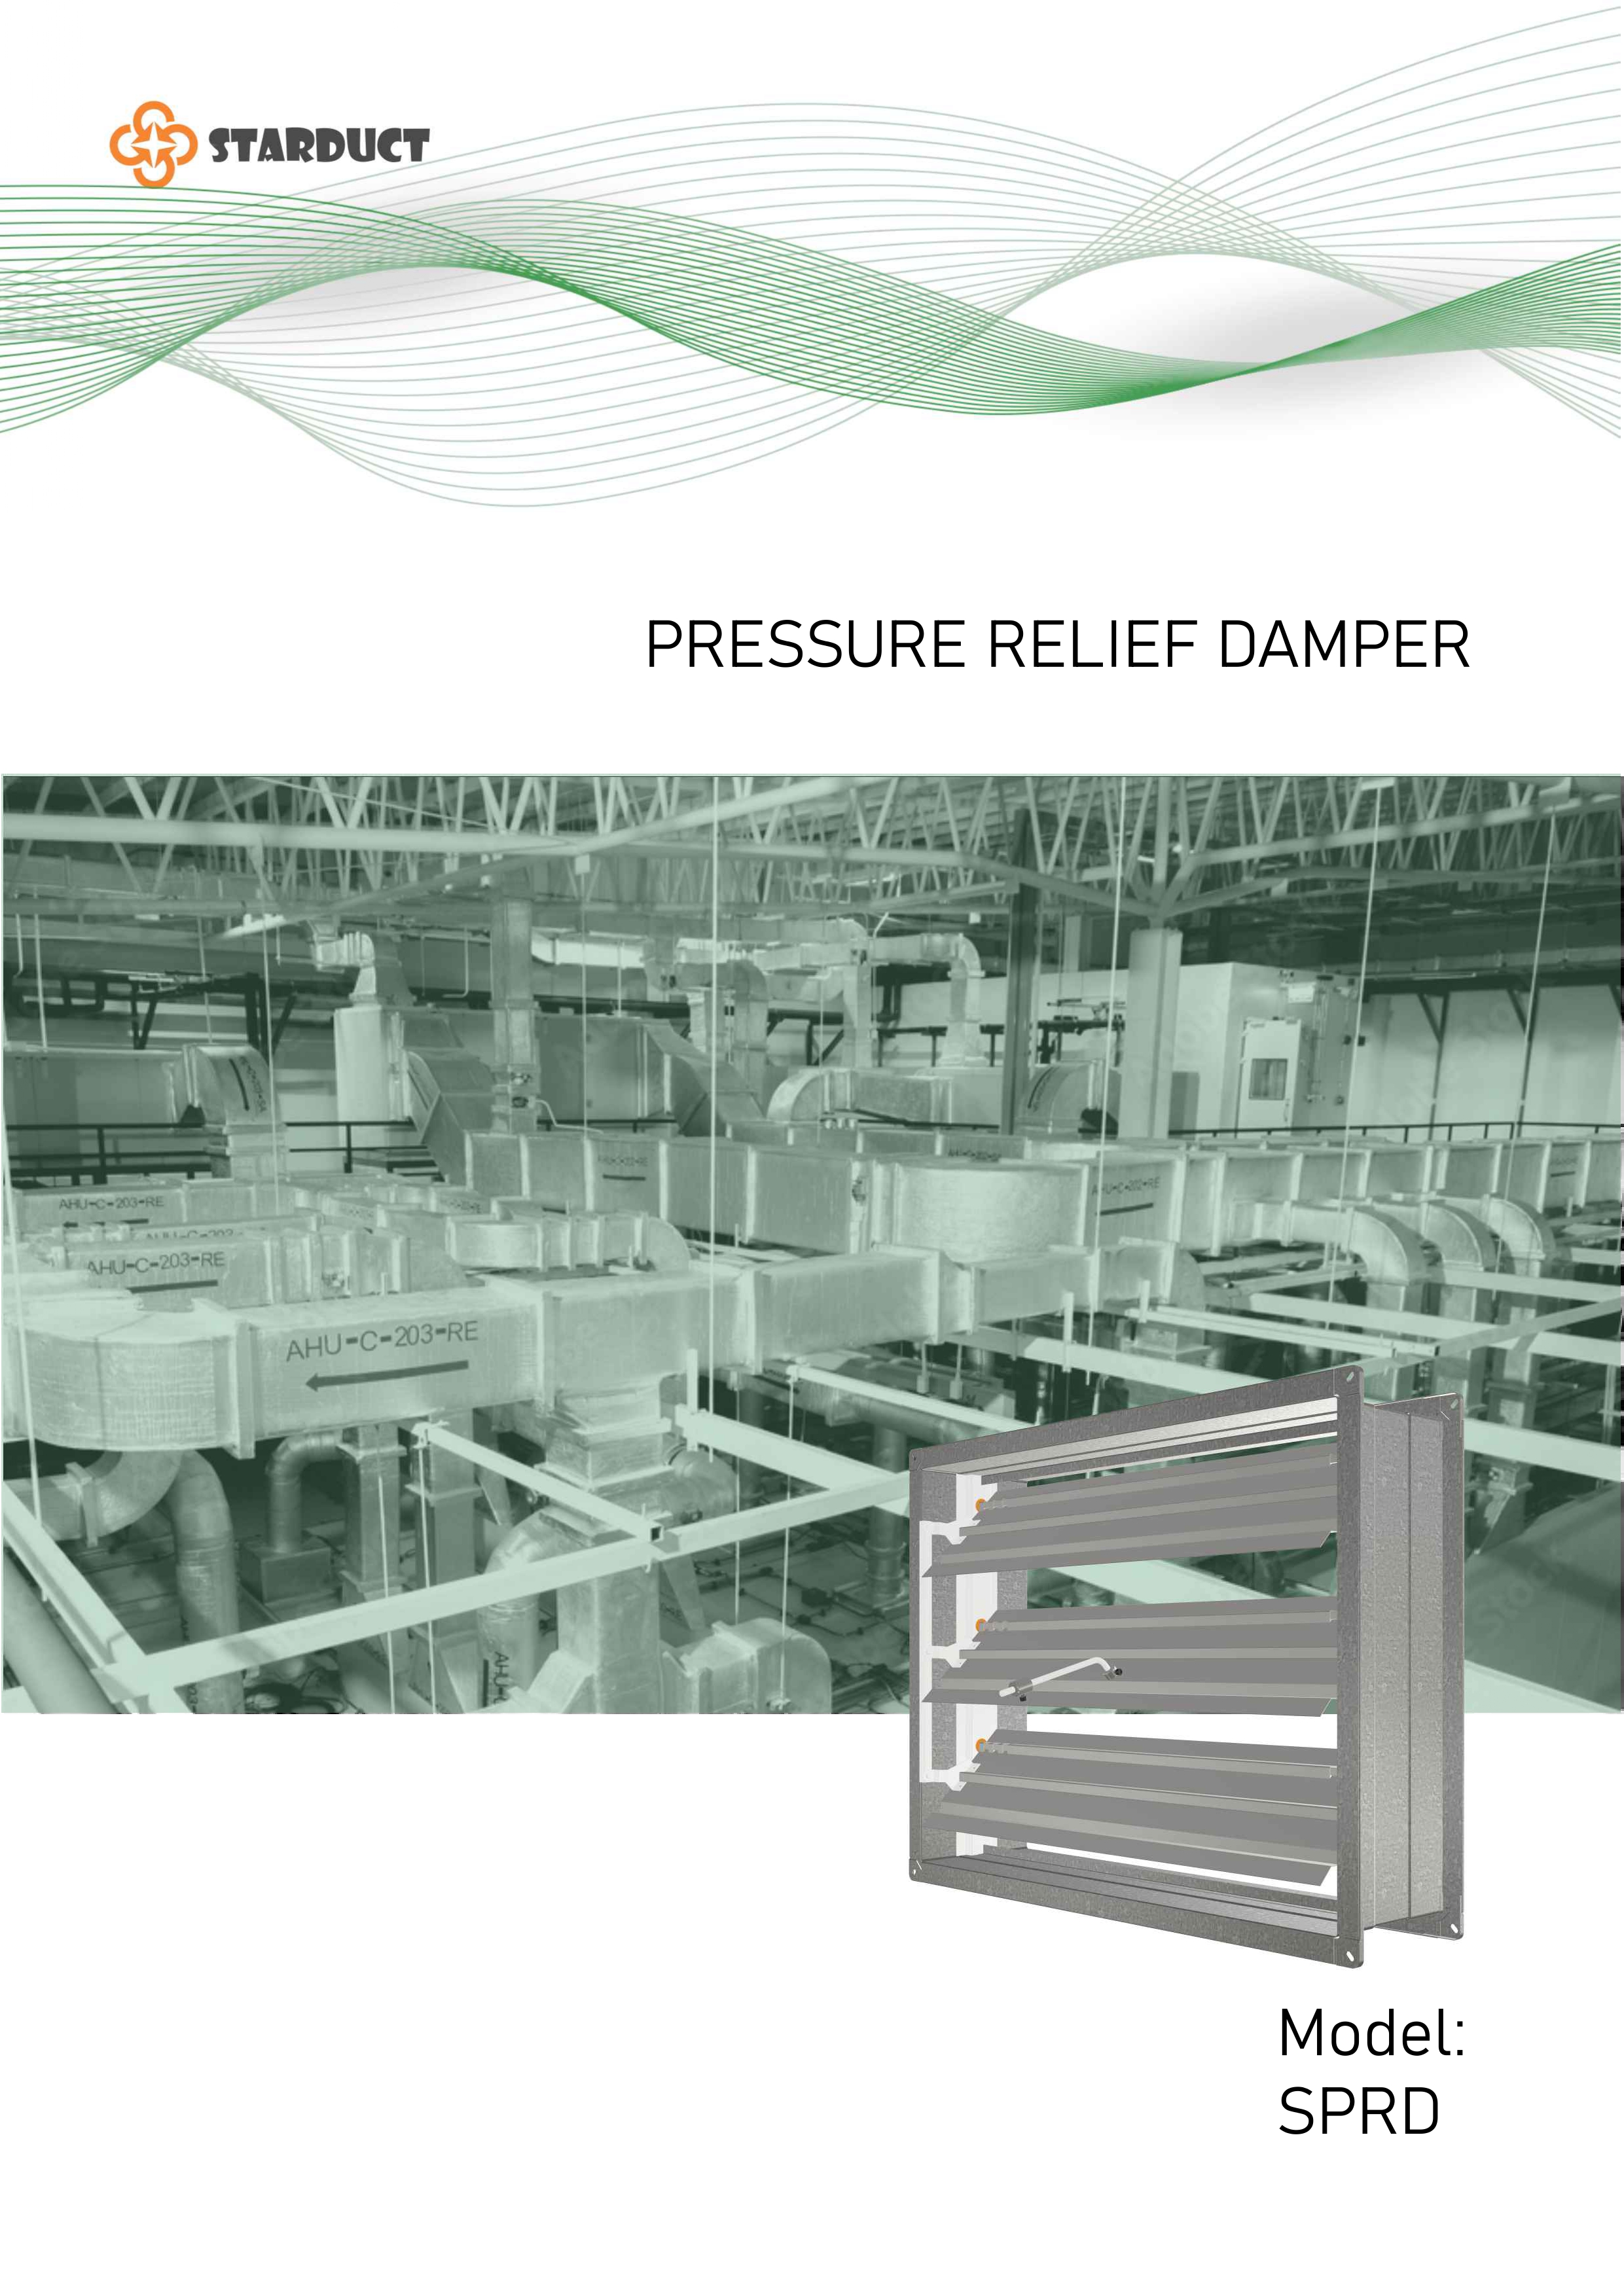 Catalogue Pressure Relief Damper SPRD